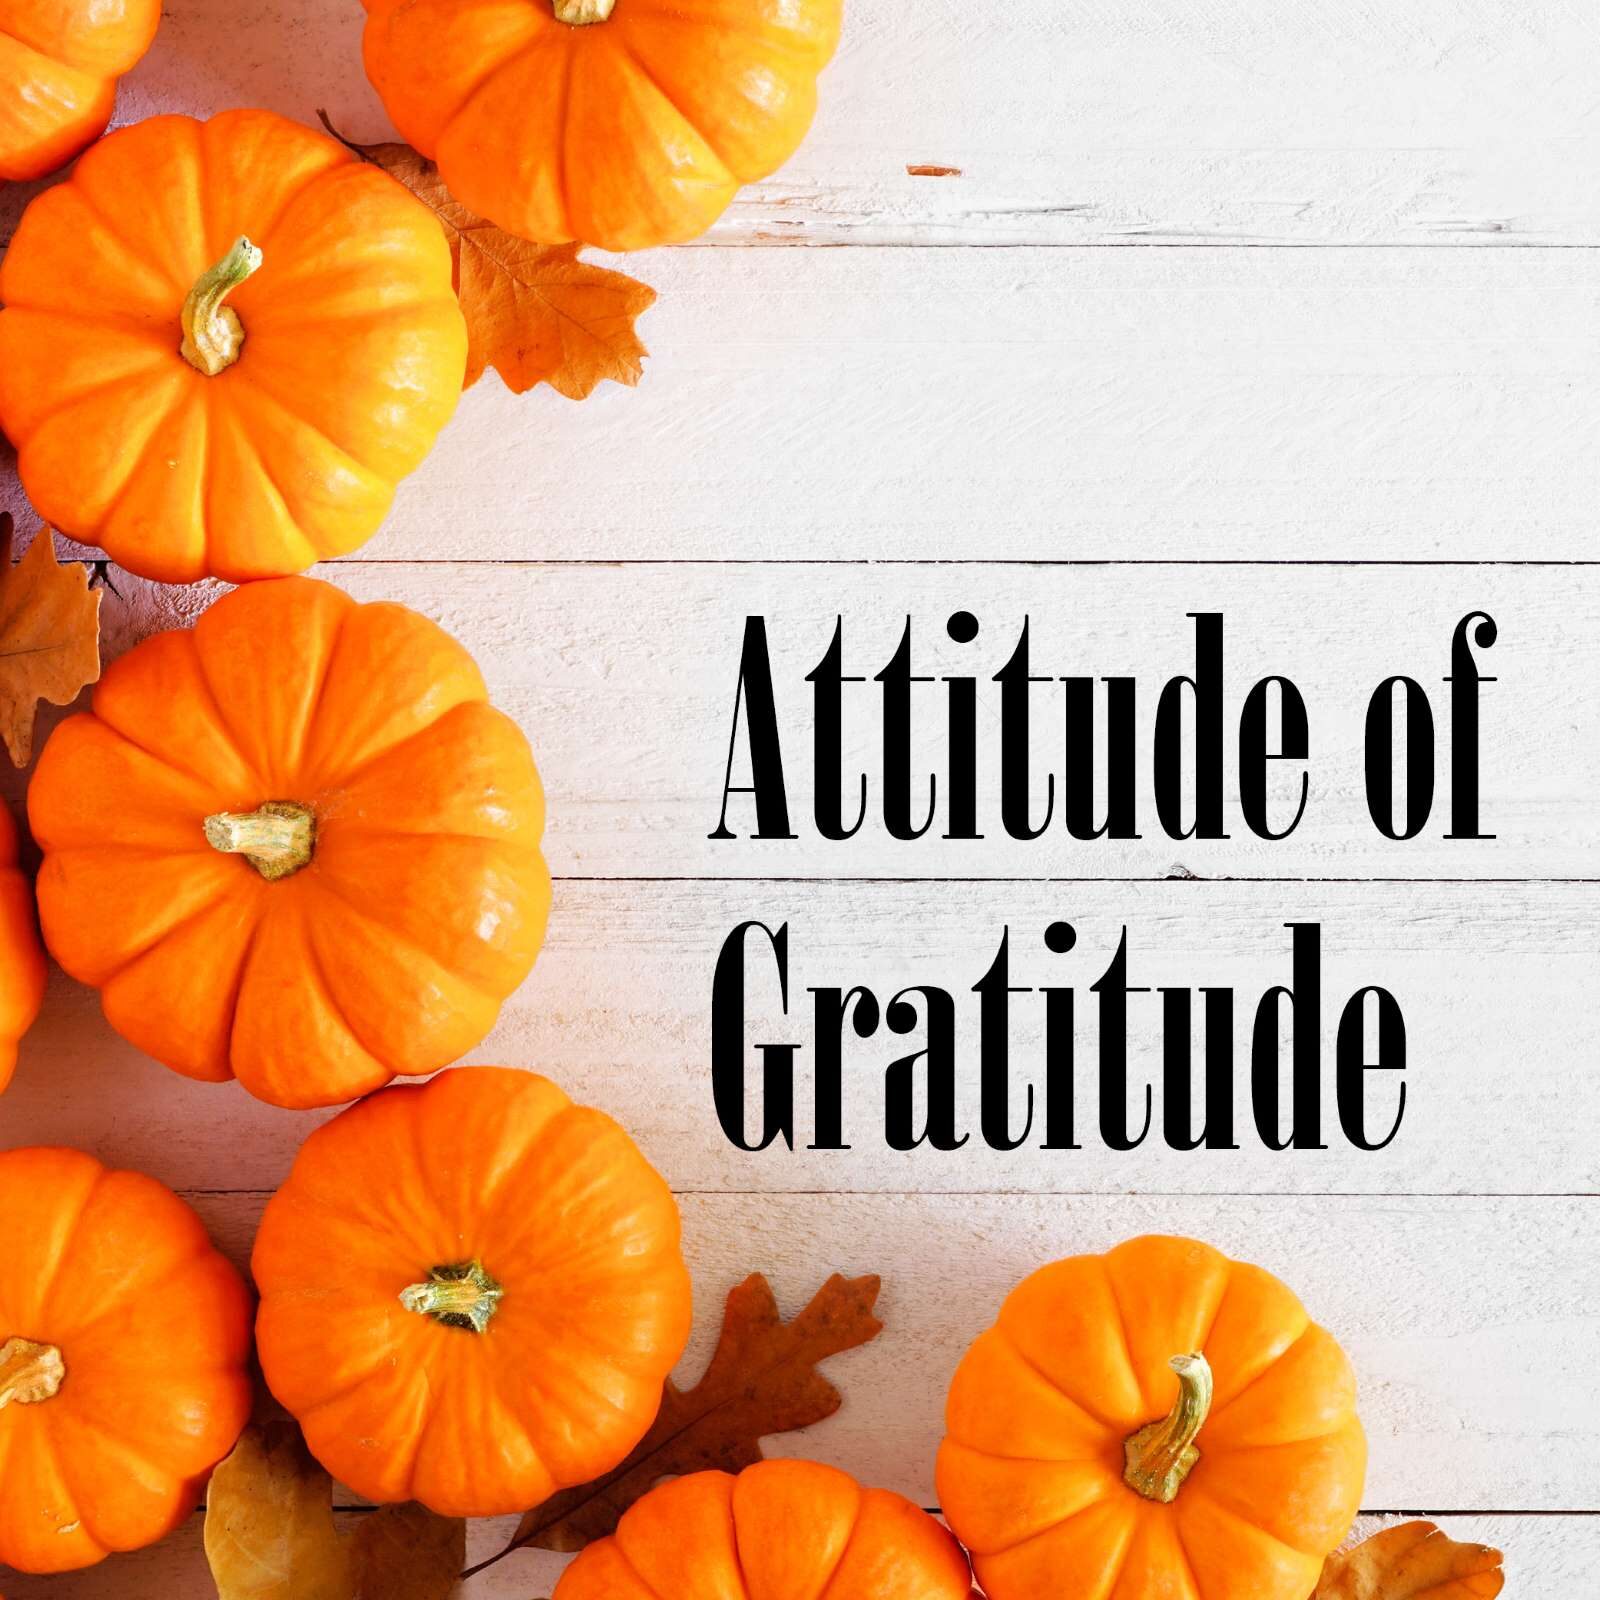 Attitude of Gratitude Photo Contest – Colors of Fall